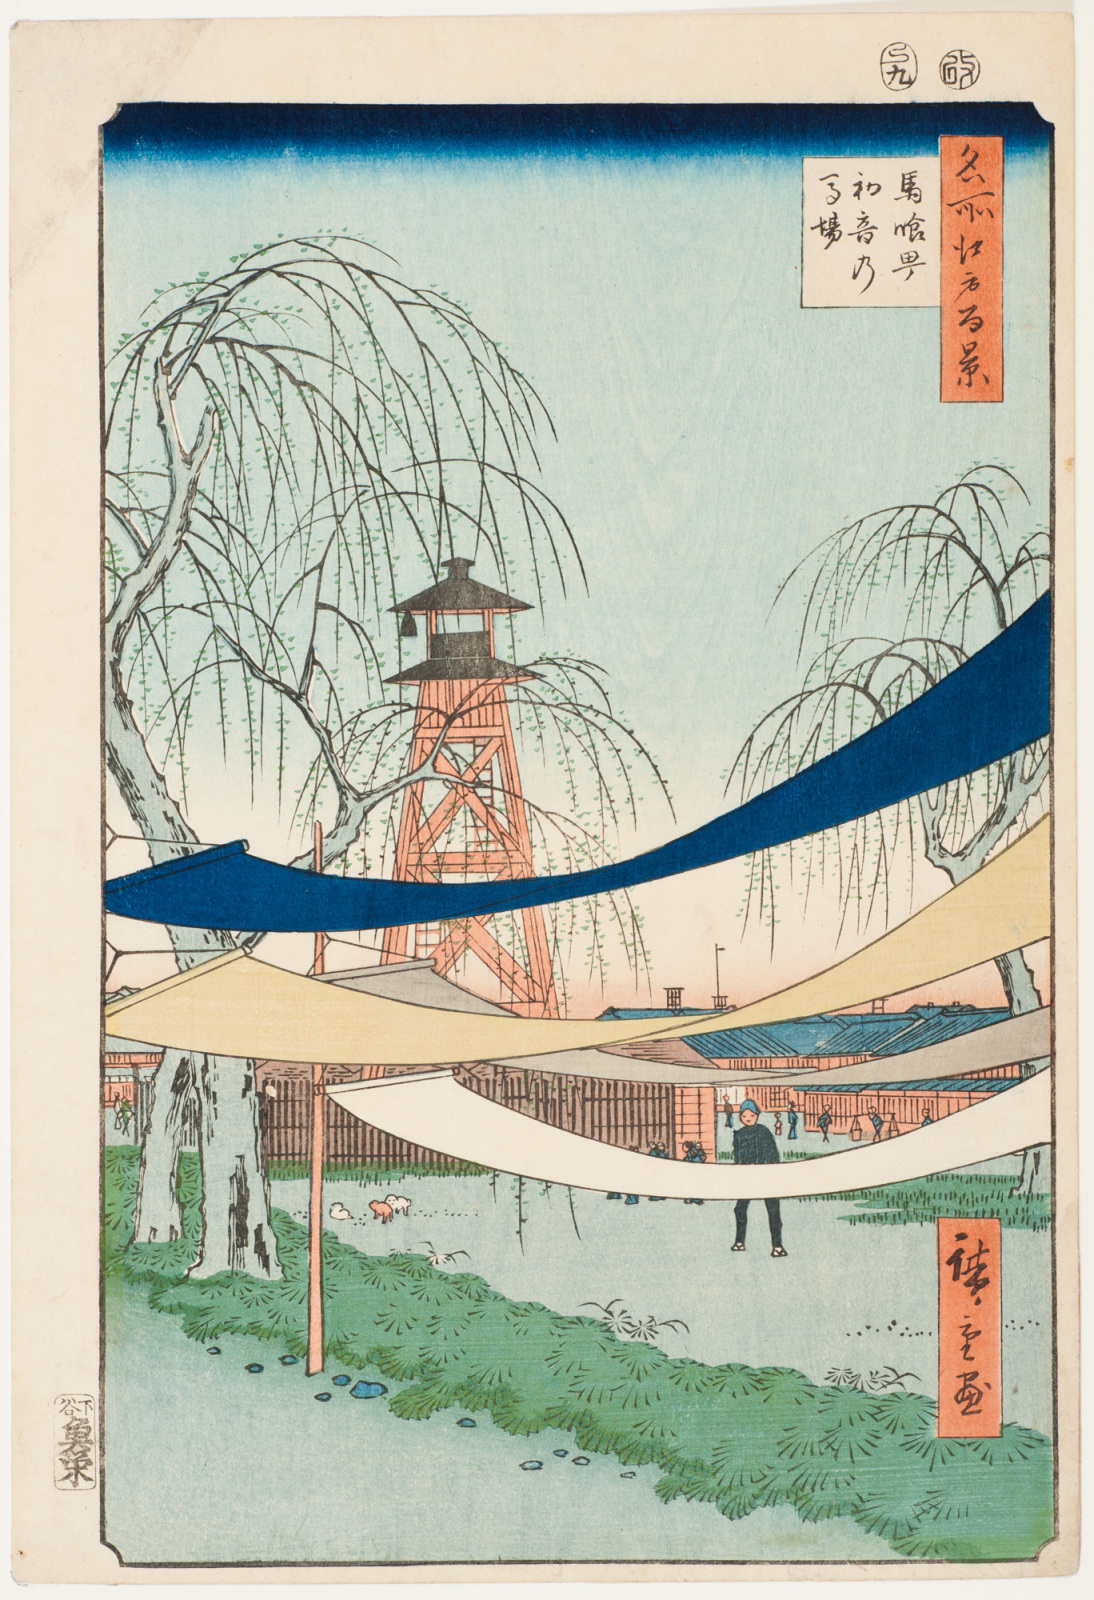 Hatsune Binicilik Alanı by  Hiroshige - 1856 - 34 x 22,9 cm 